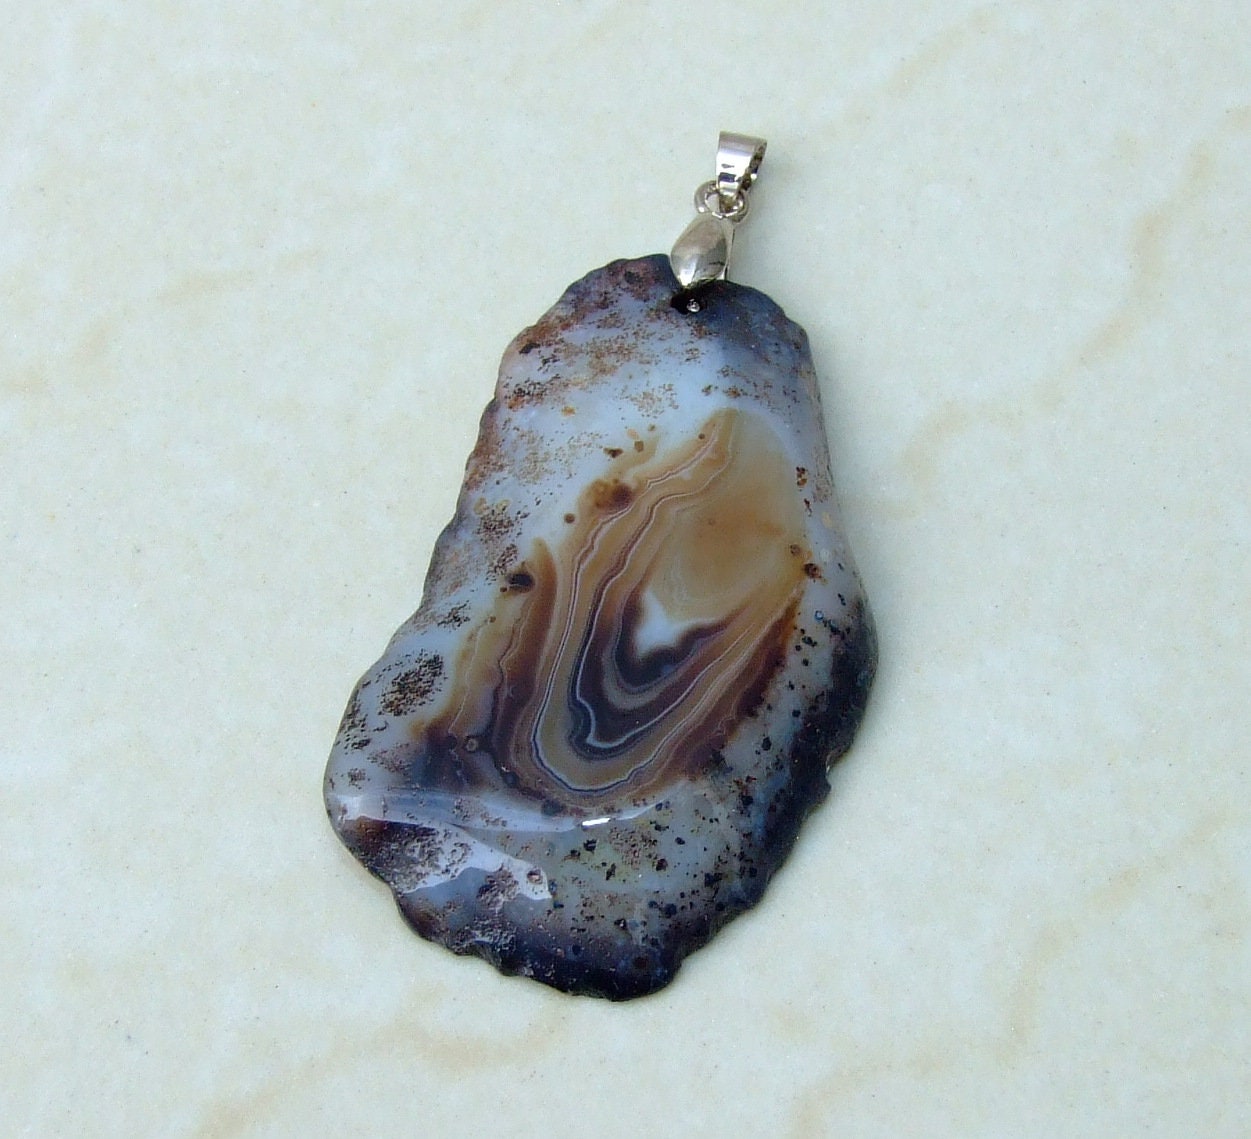 Natural Dendritic Agate Pendant, Gemstone Pendant, Agate Slice Pendant, Jewelry Stone Pendant, Agate Necklace Pendant - 29mm x 51mm - 6923